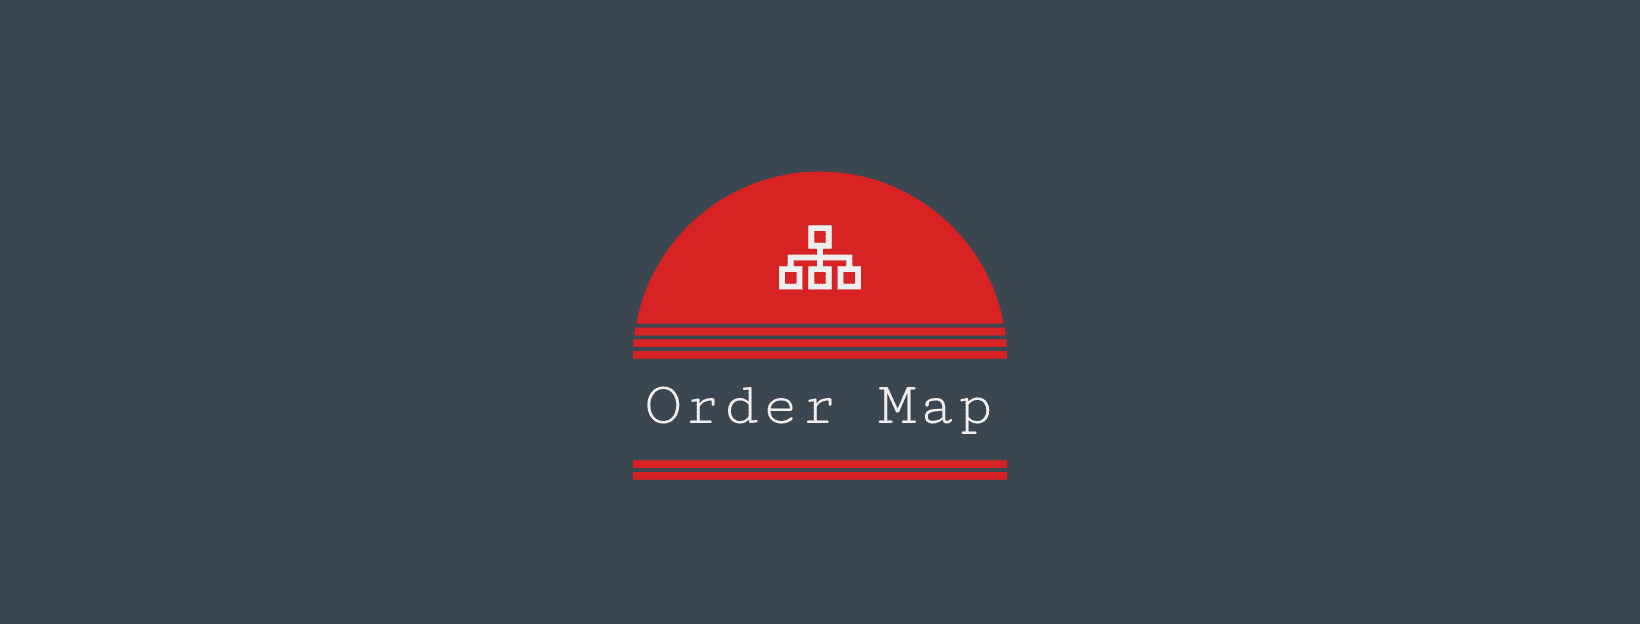 Order Map